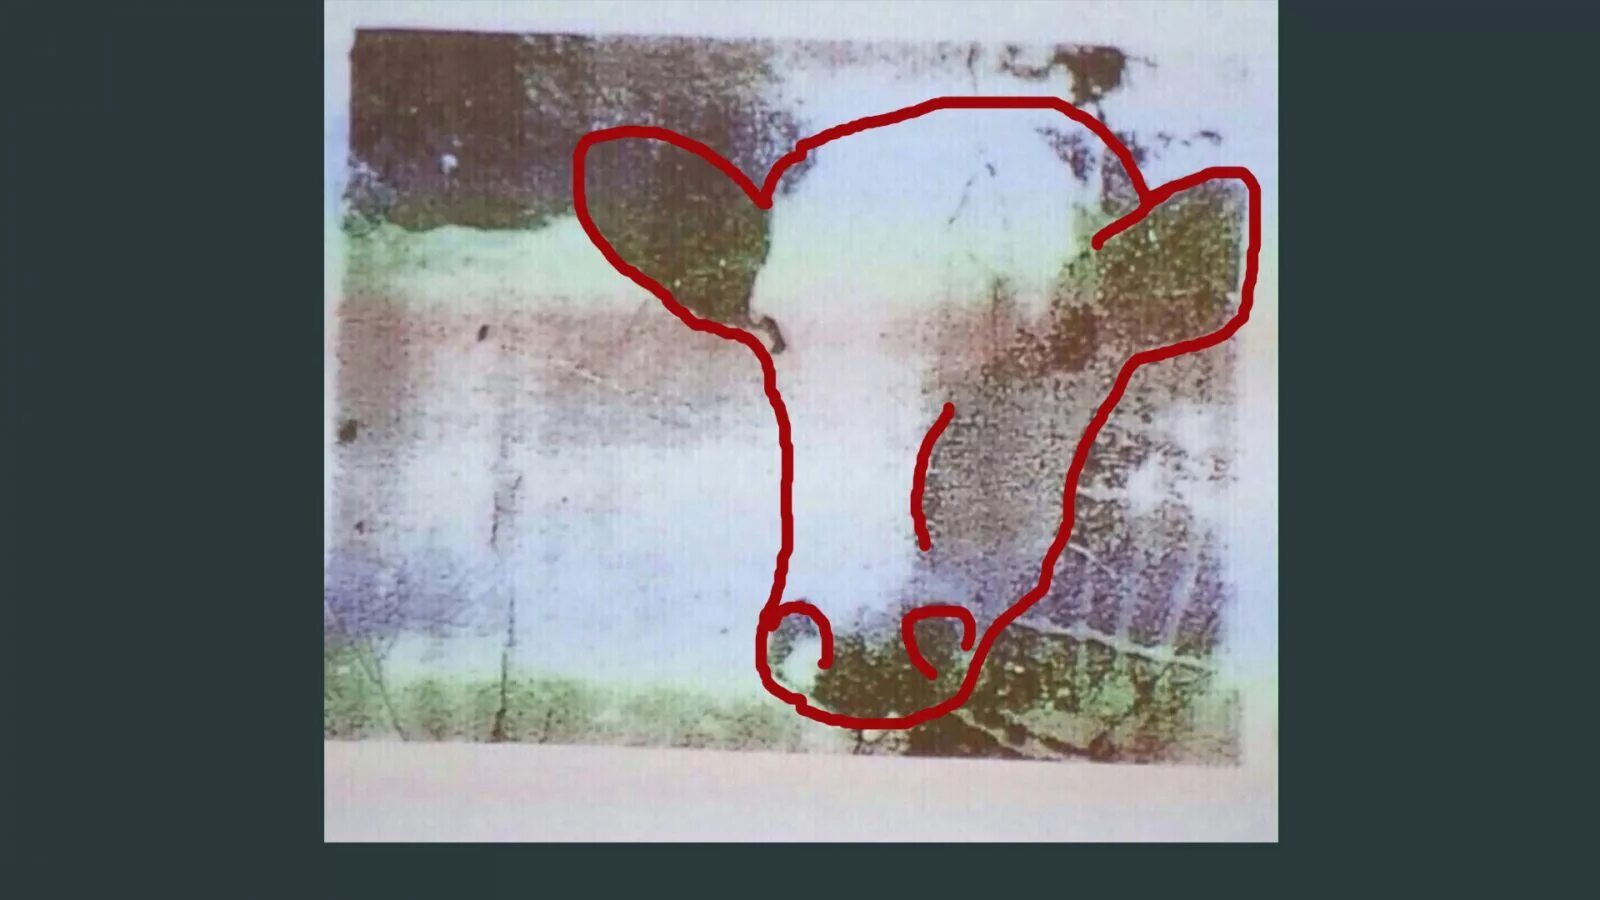 Тест на шизофрению корова. Тест на шизофрению картинка. Тест на шизофрению с изображением коровы. Тест рисунок корова.